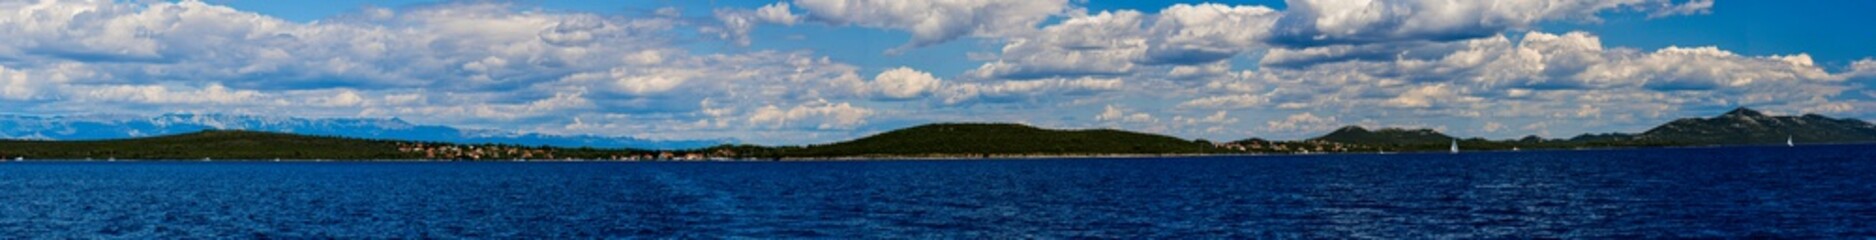 Muline on Ugljen island in Croatia